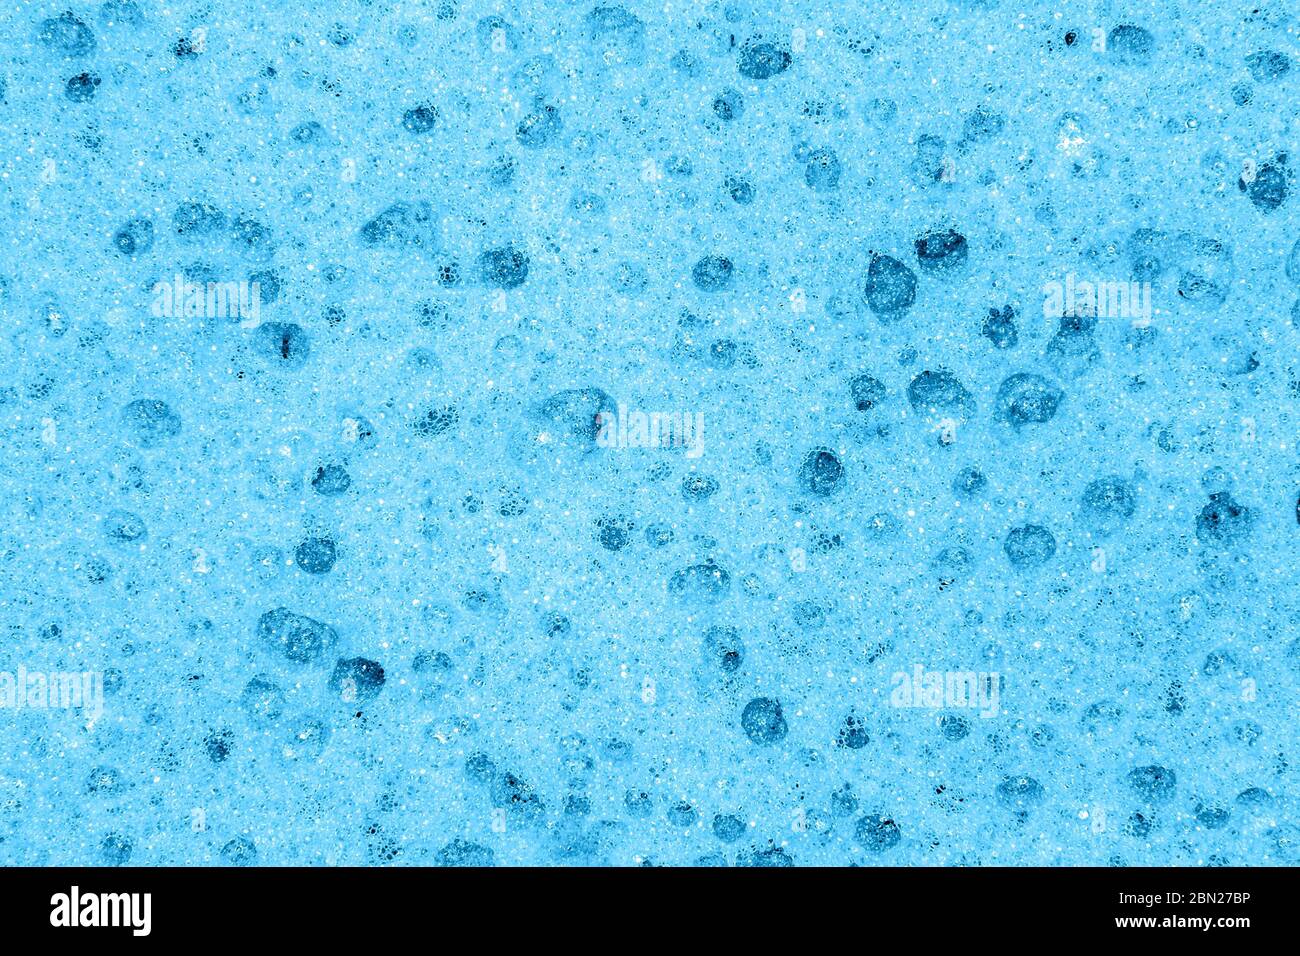 image background slice texture foam rubber blue Stock Photo